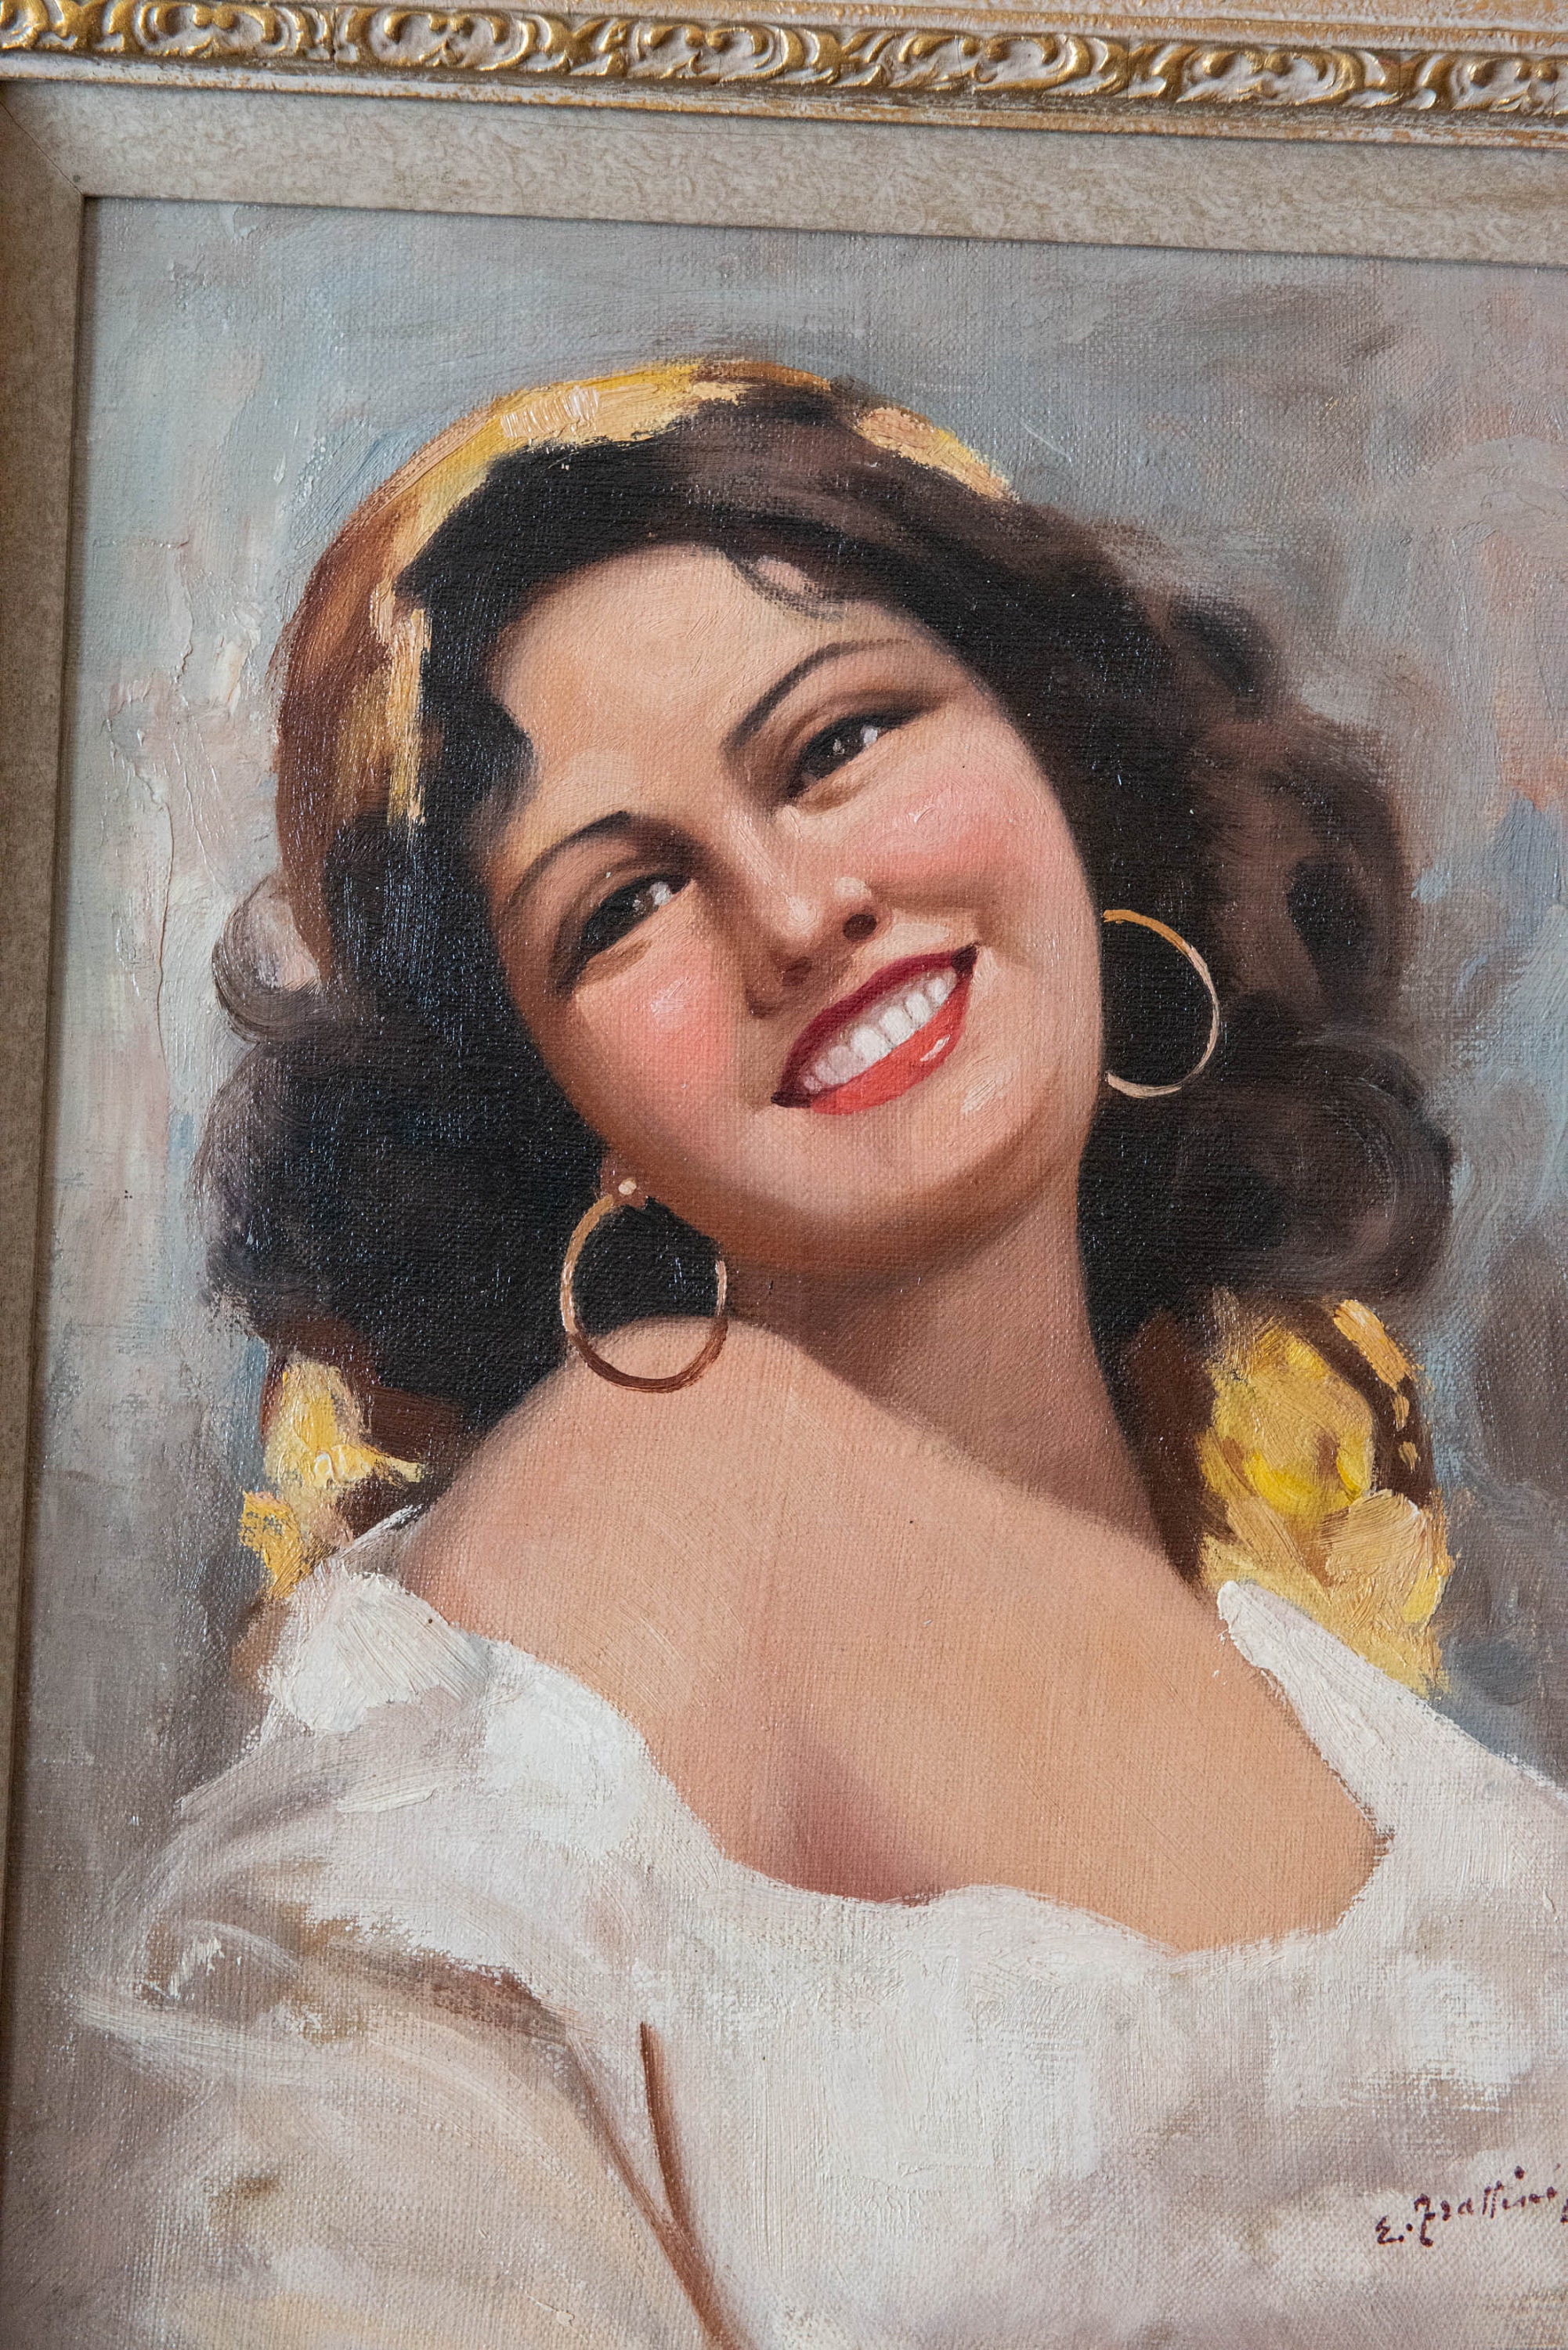 Enrico Frattini Oil on Canvas Painting Woman Portrait Rococo